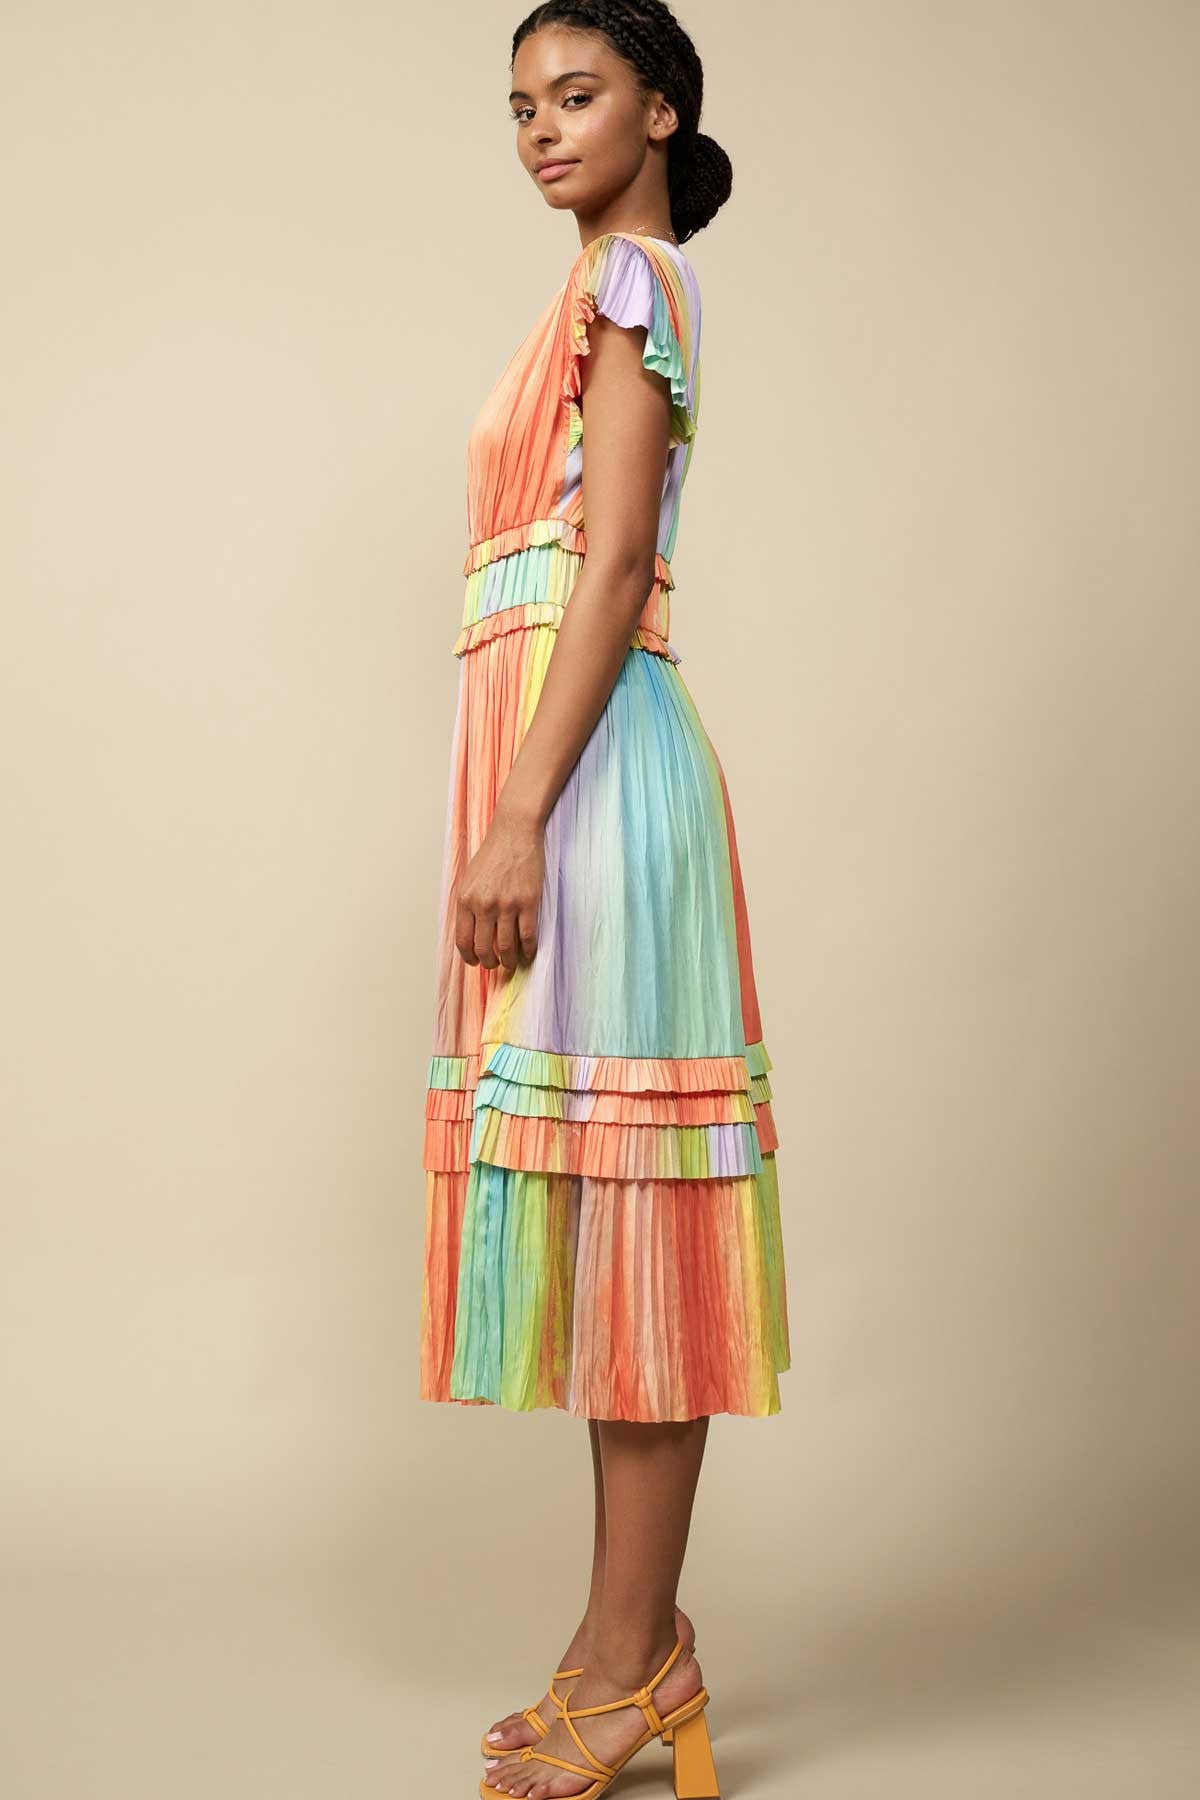 Colorful Dress